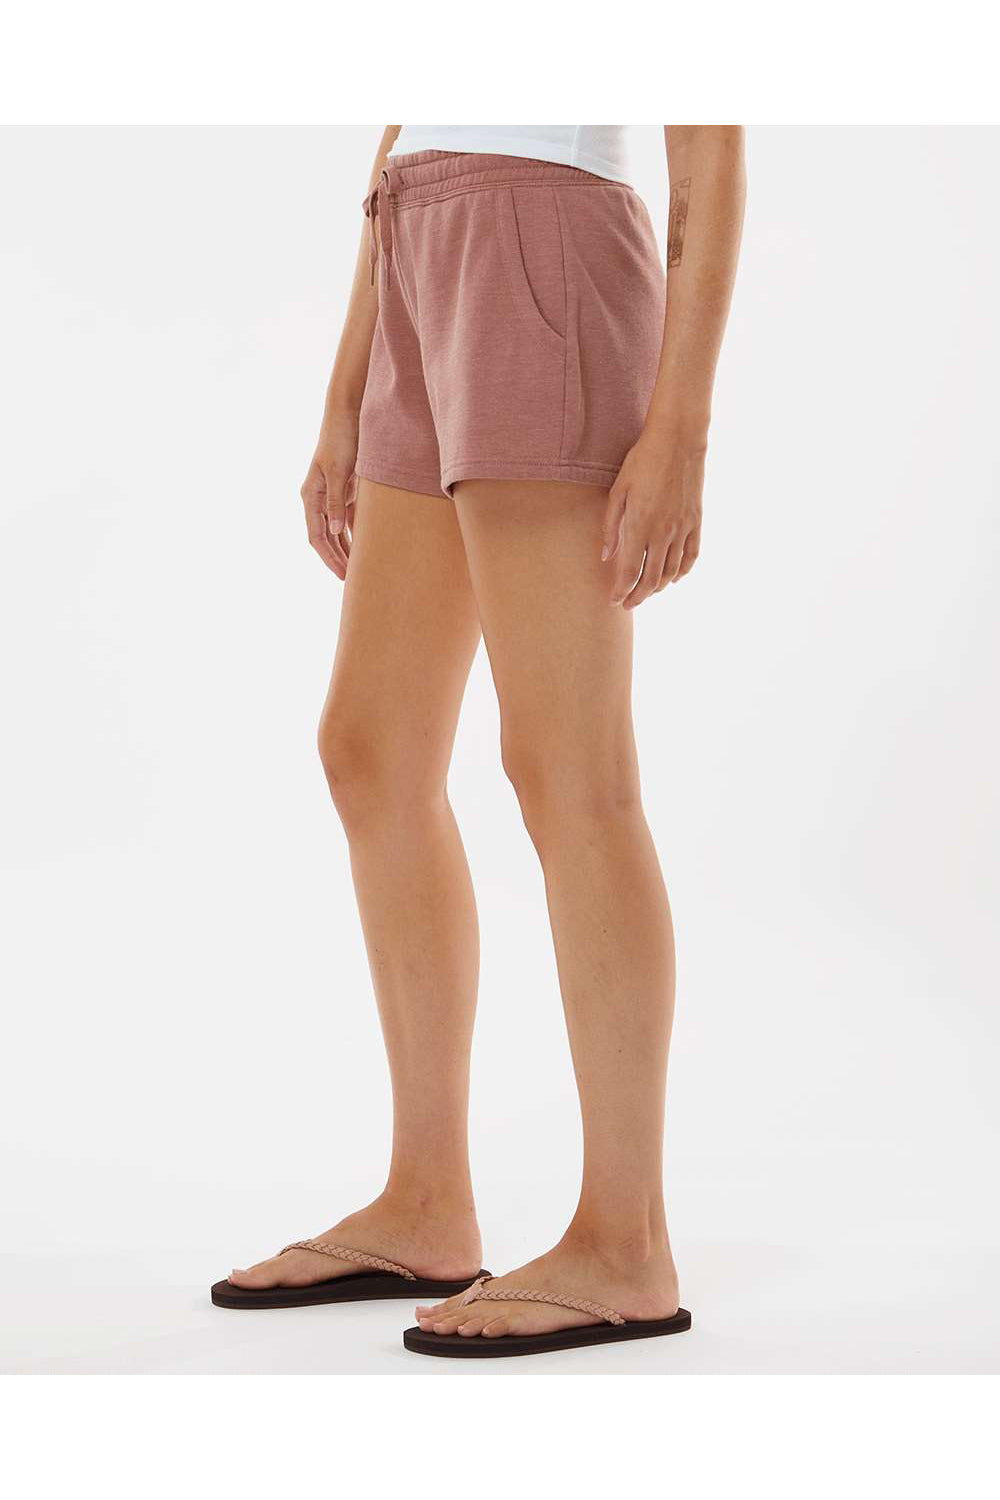 Independent Trading Co. PRM20SRT Womens California Wave Wash Fleece Shorts w/ Pockets Dusty Rose Model Side